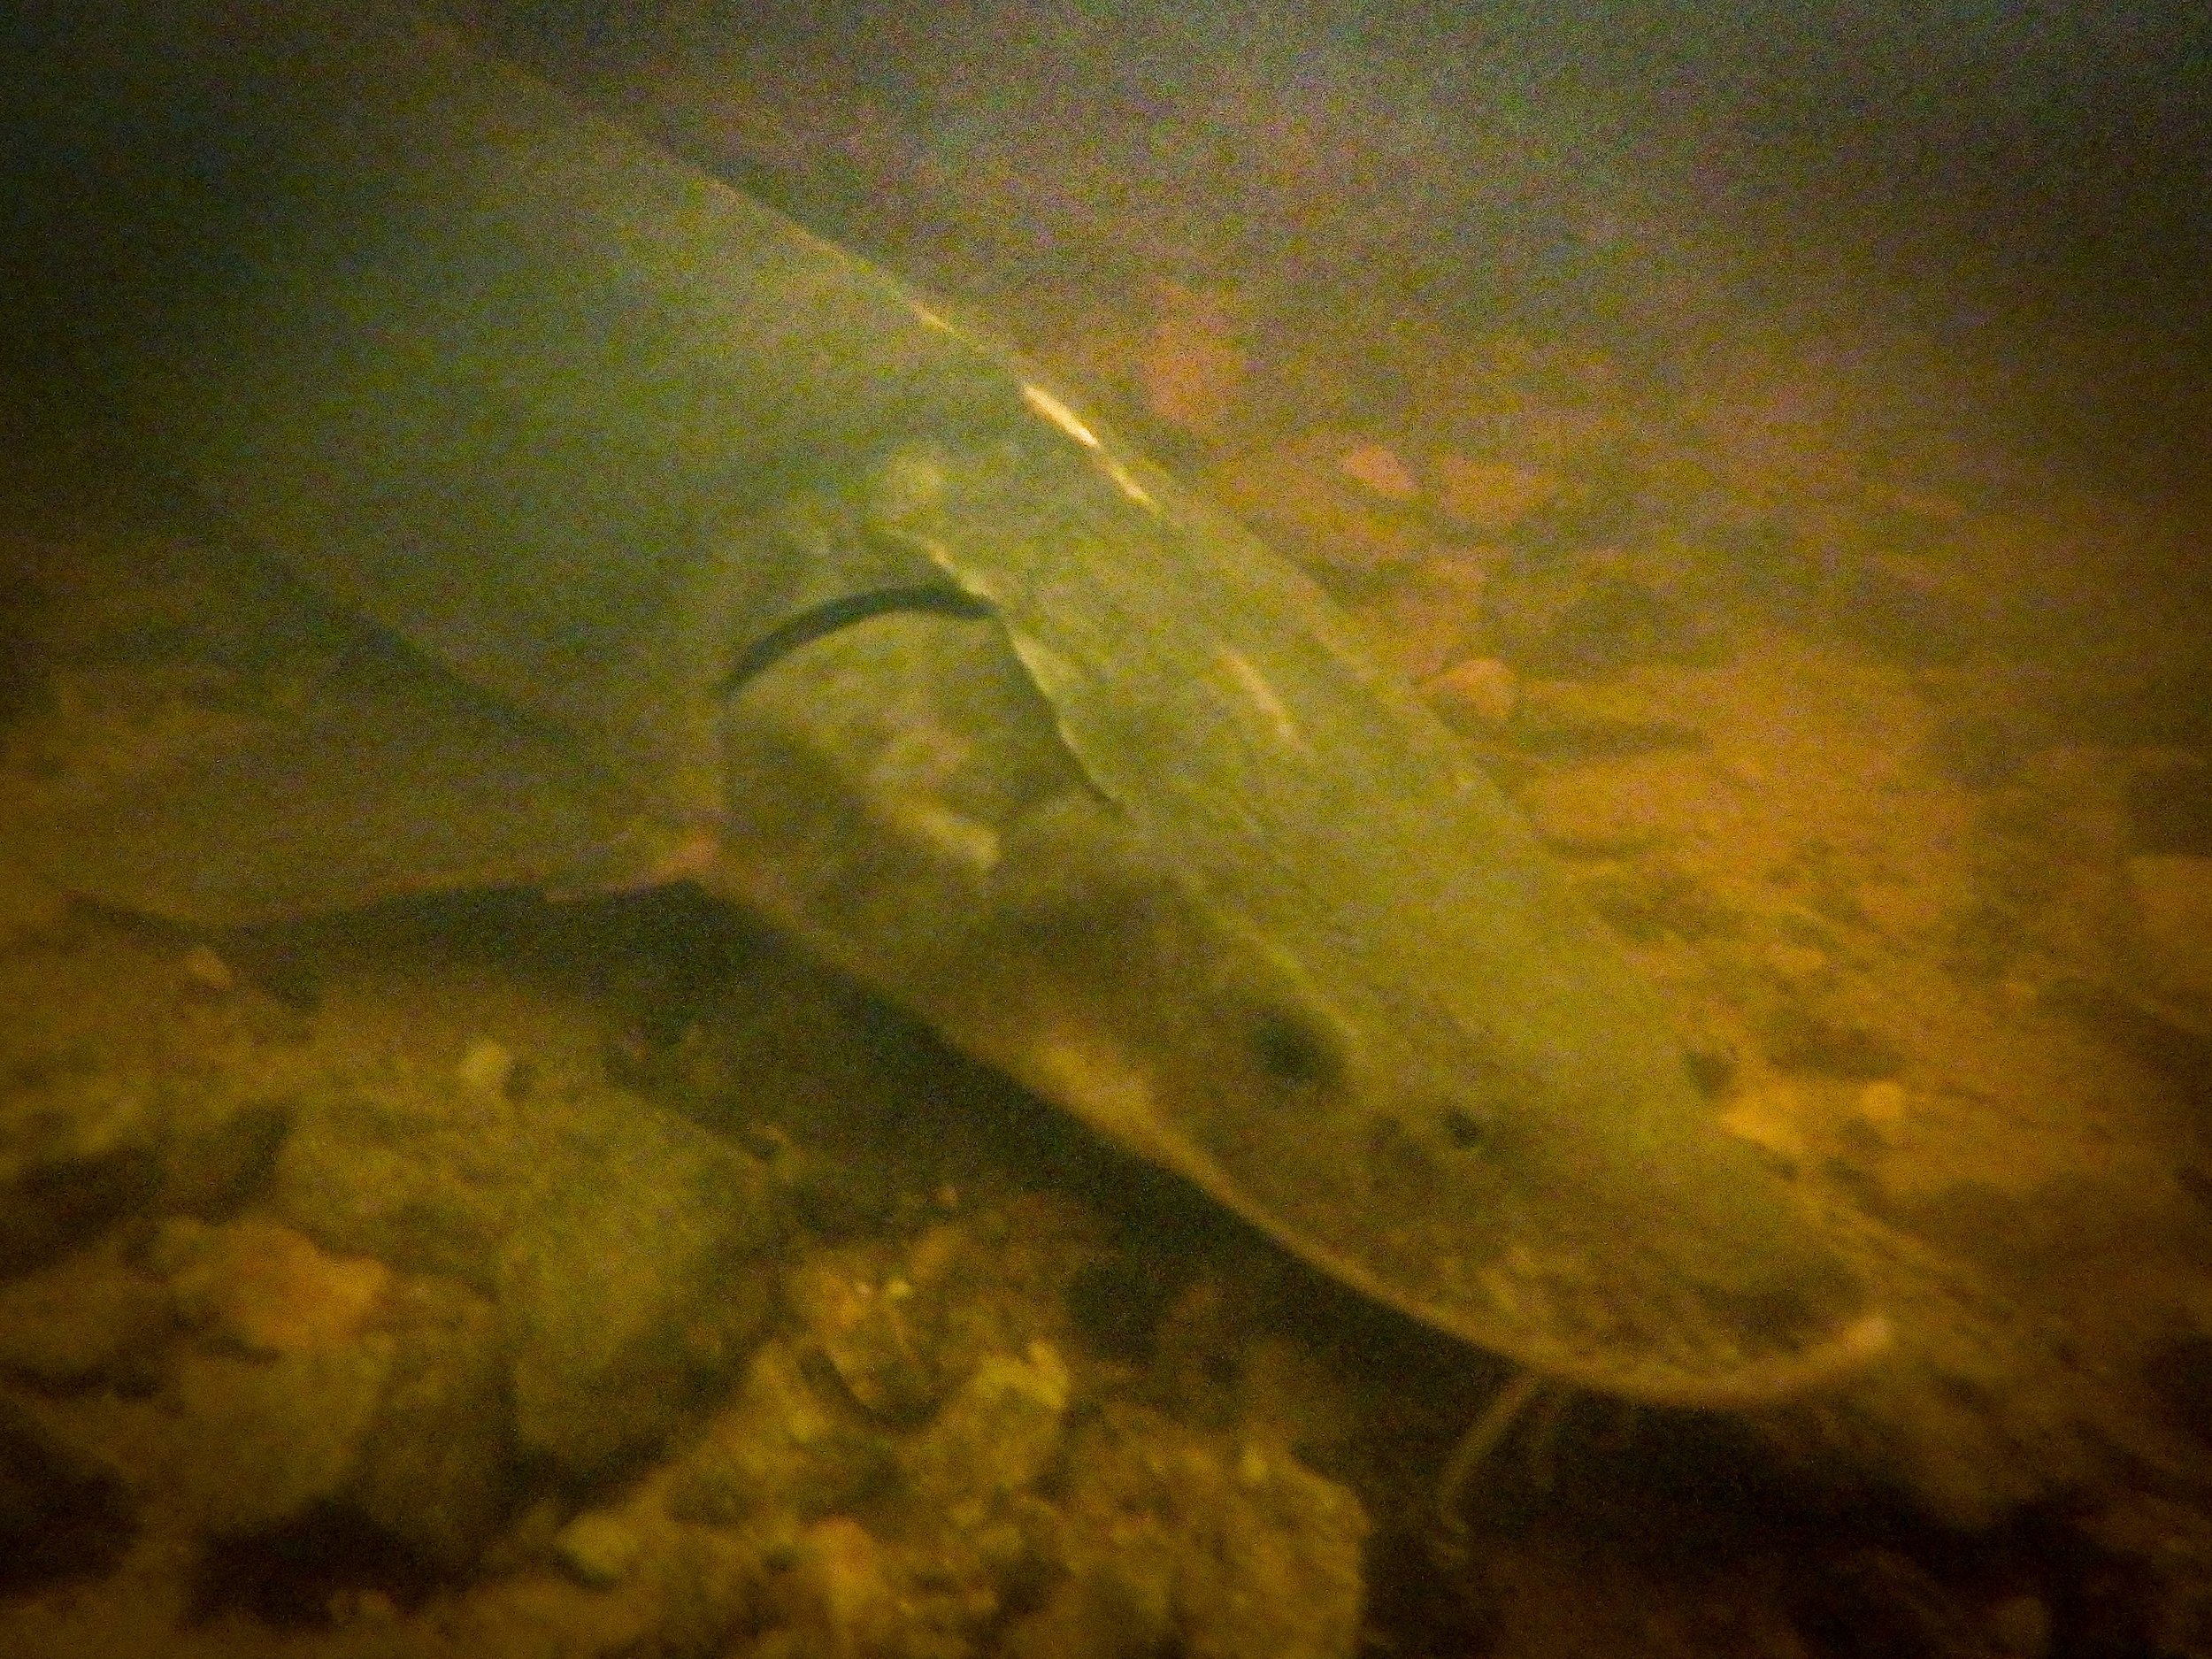 A glimpse at lake sturgeon (namew) underwater.